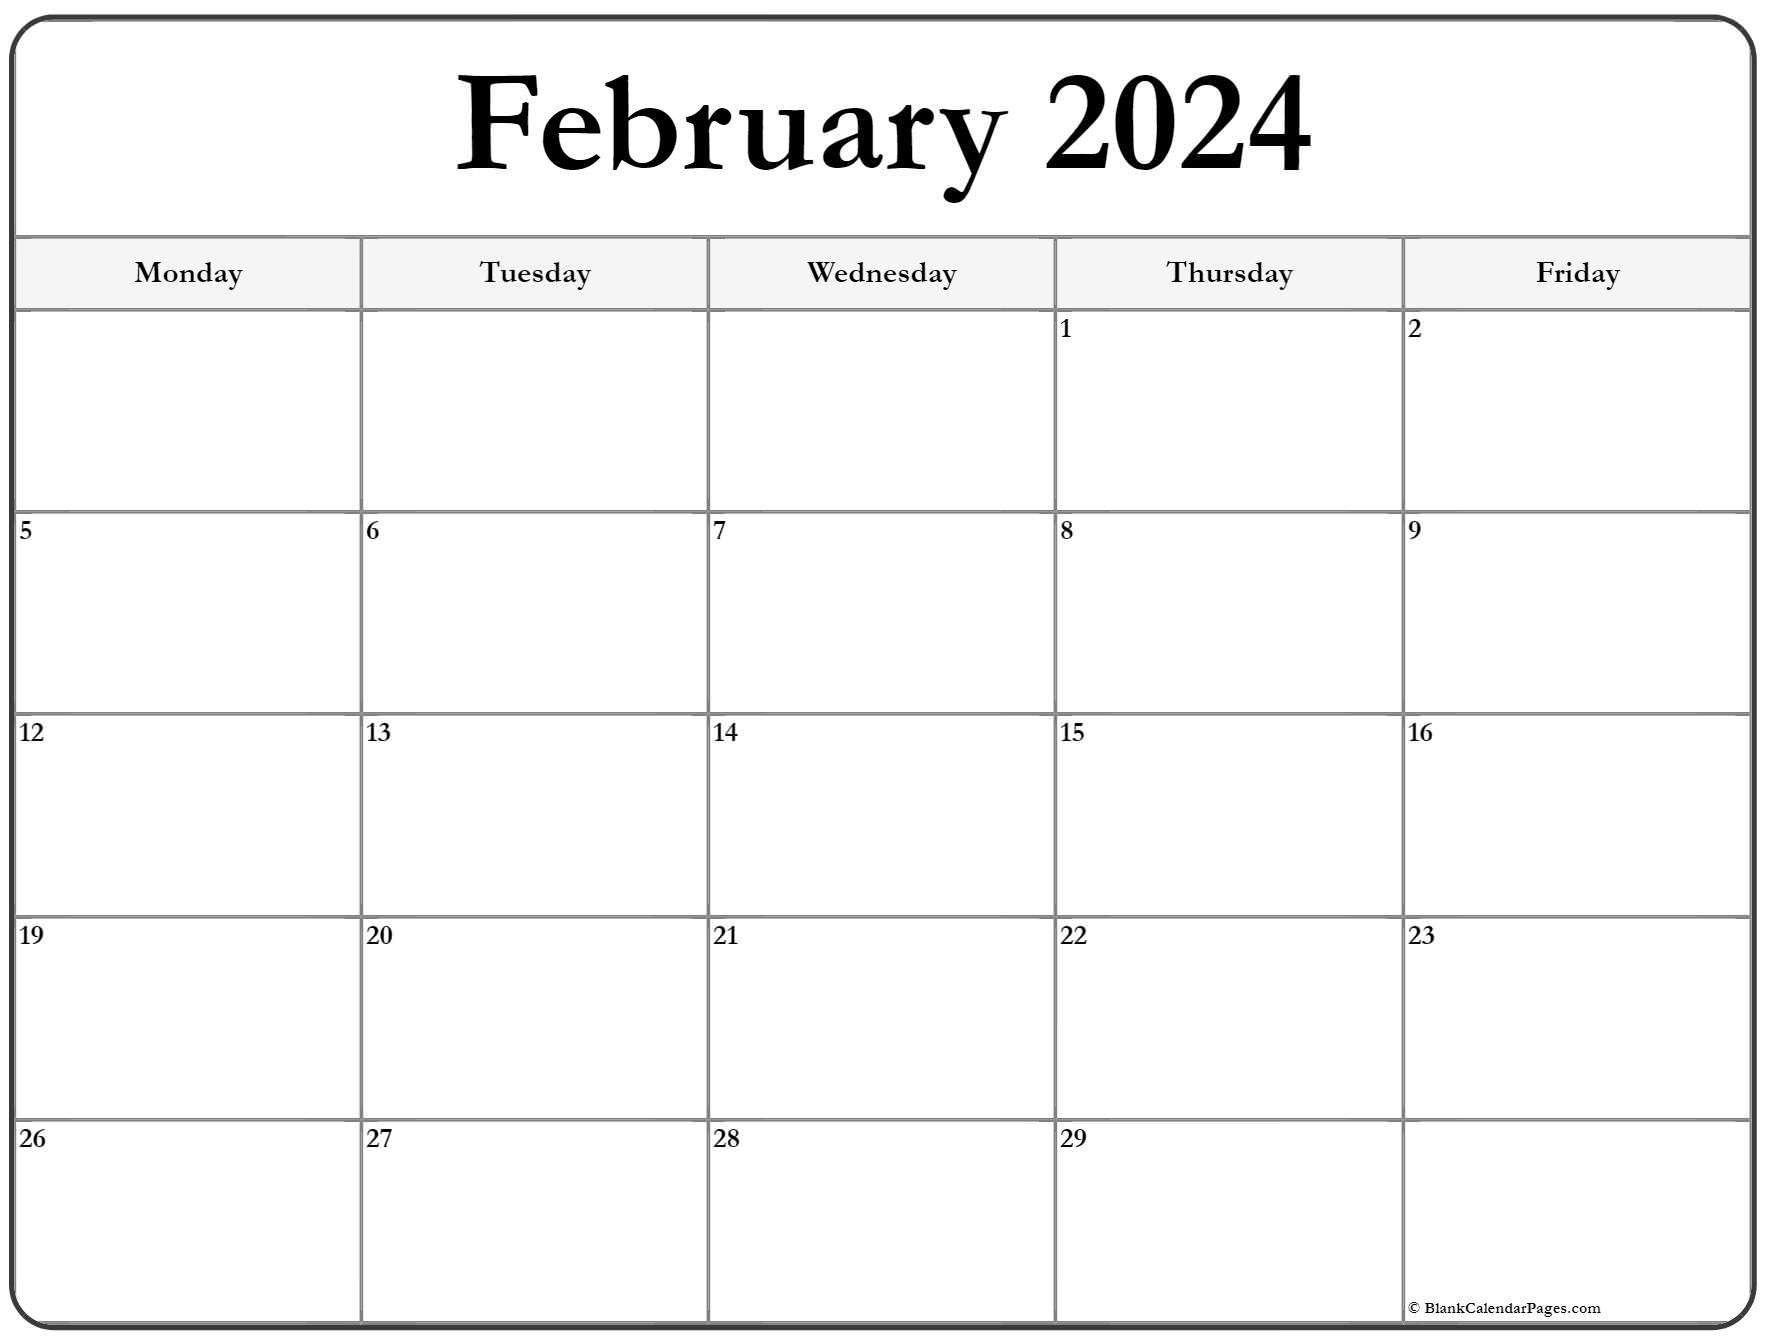 February 2021 Monday Calendar | Monday to Sunday